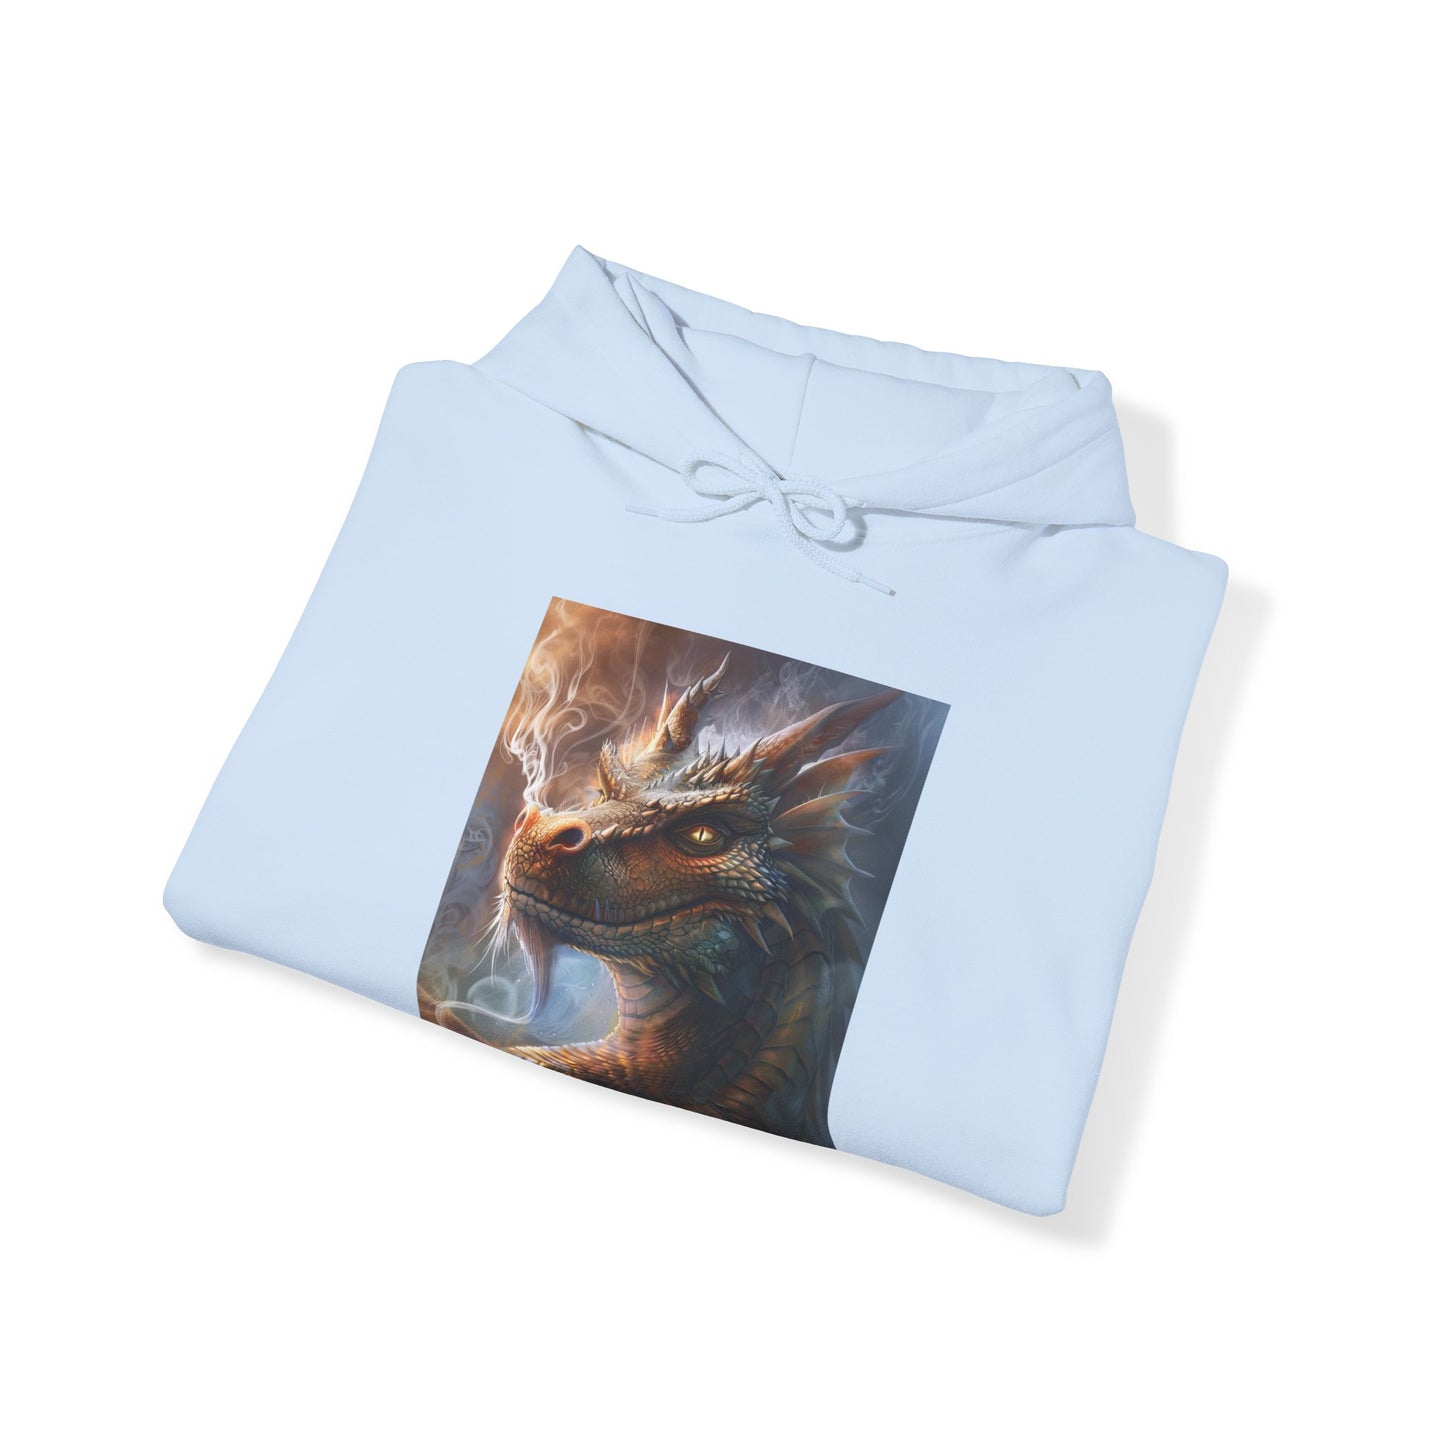 Unisex Heavy Blend™ Hooded Sweatshirt: Smoking Dragon